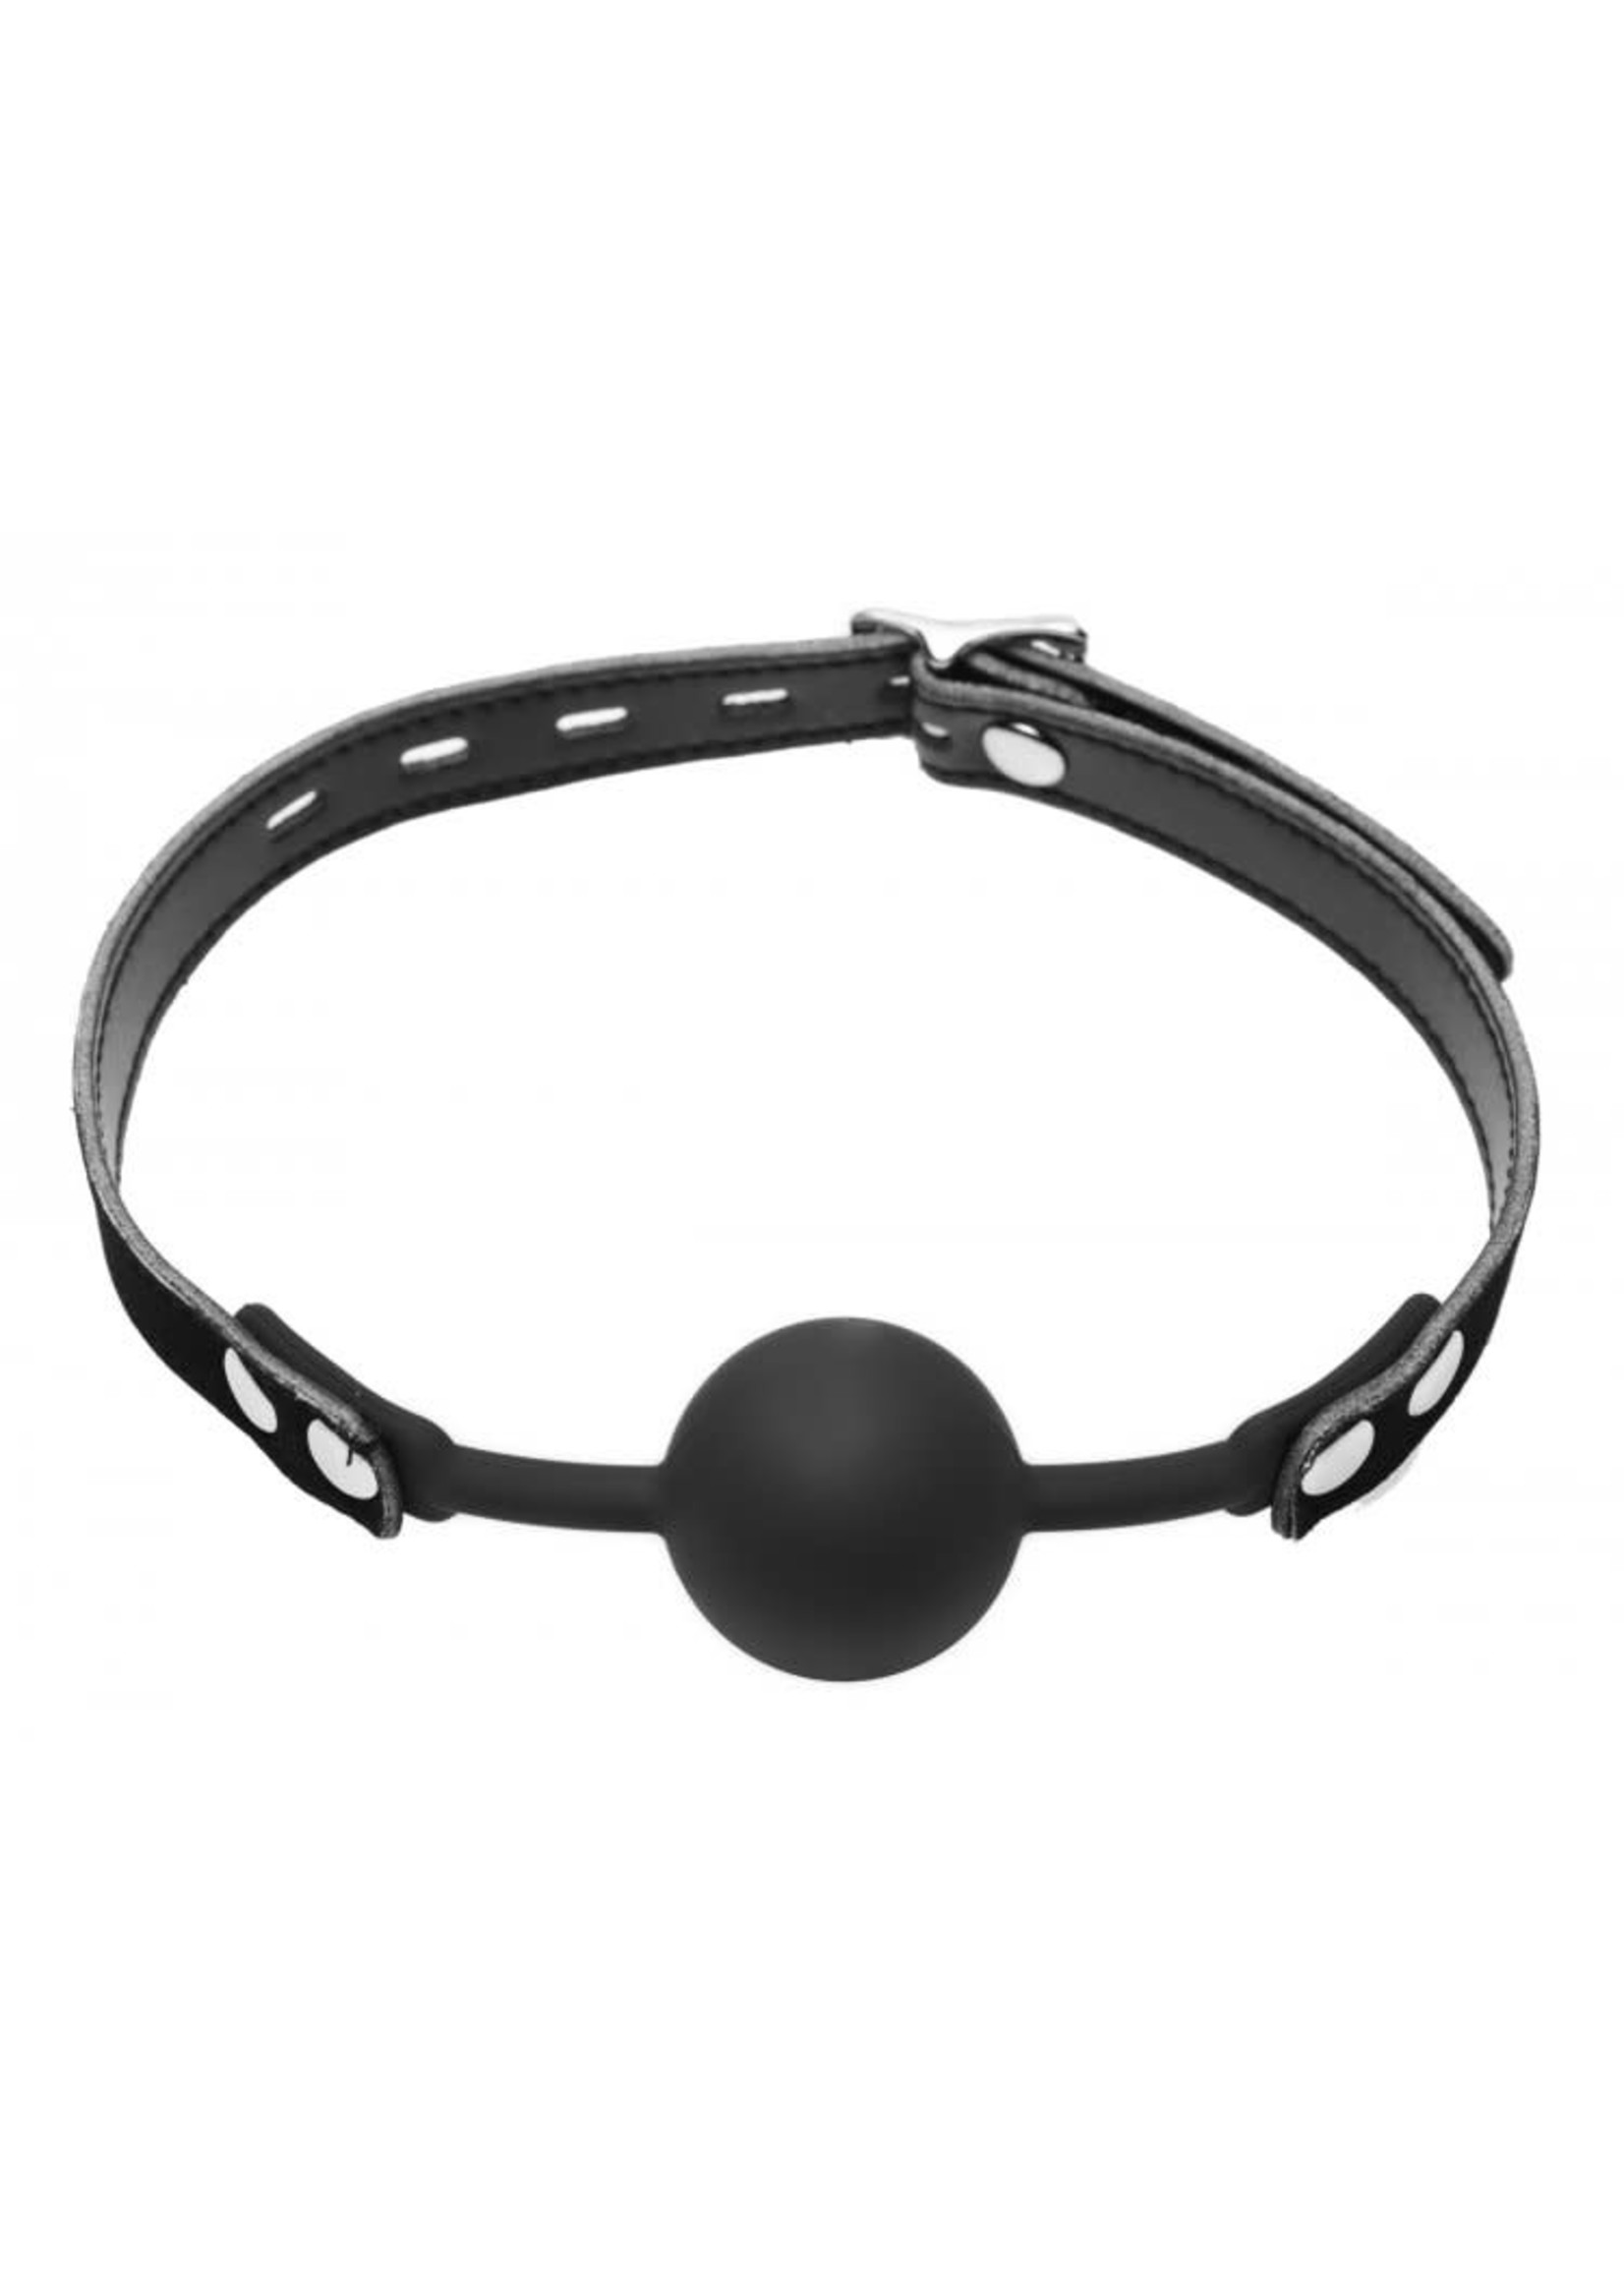 XR Brands Premium Hush Locking Silicone Comfort Ball Gag